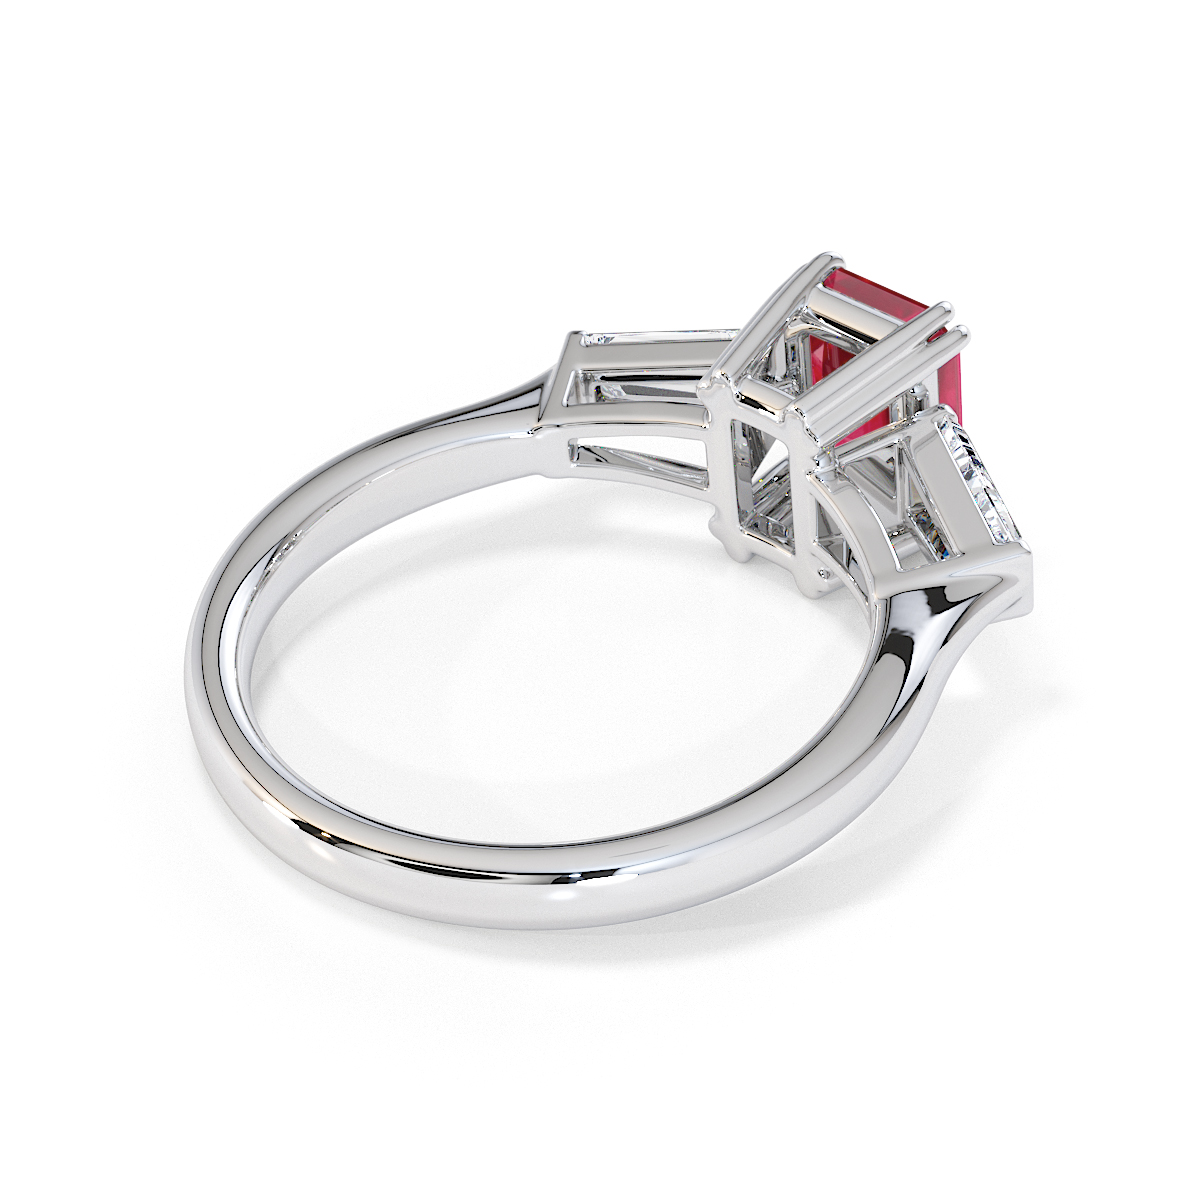 Gold / Platinum Ruby and Diamond Engagement Ring RZ3446